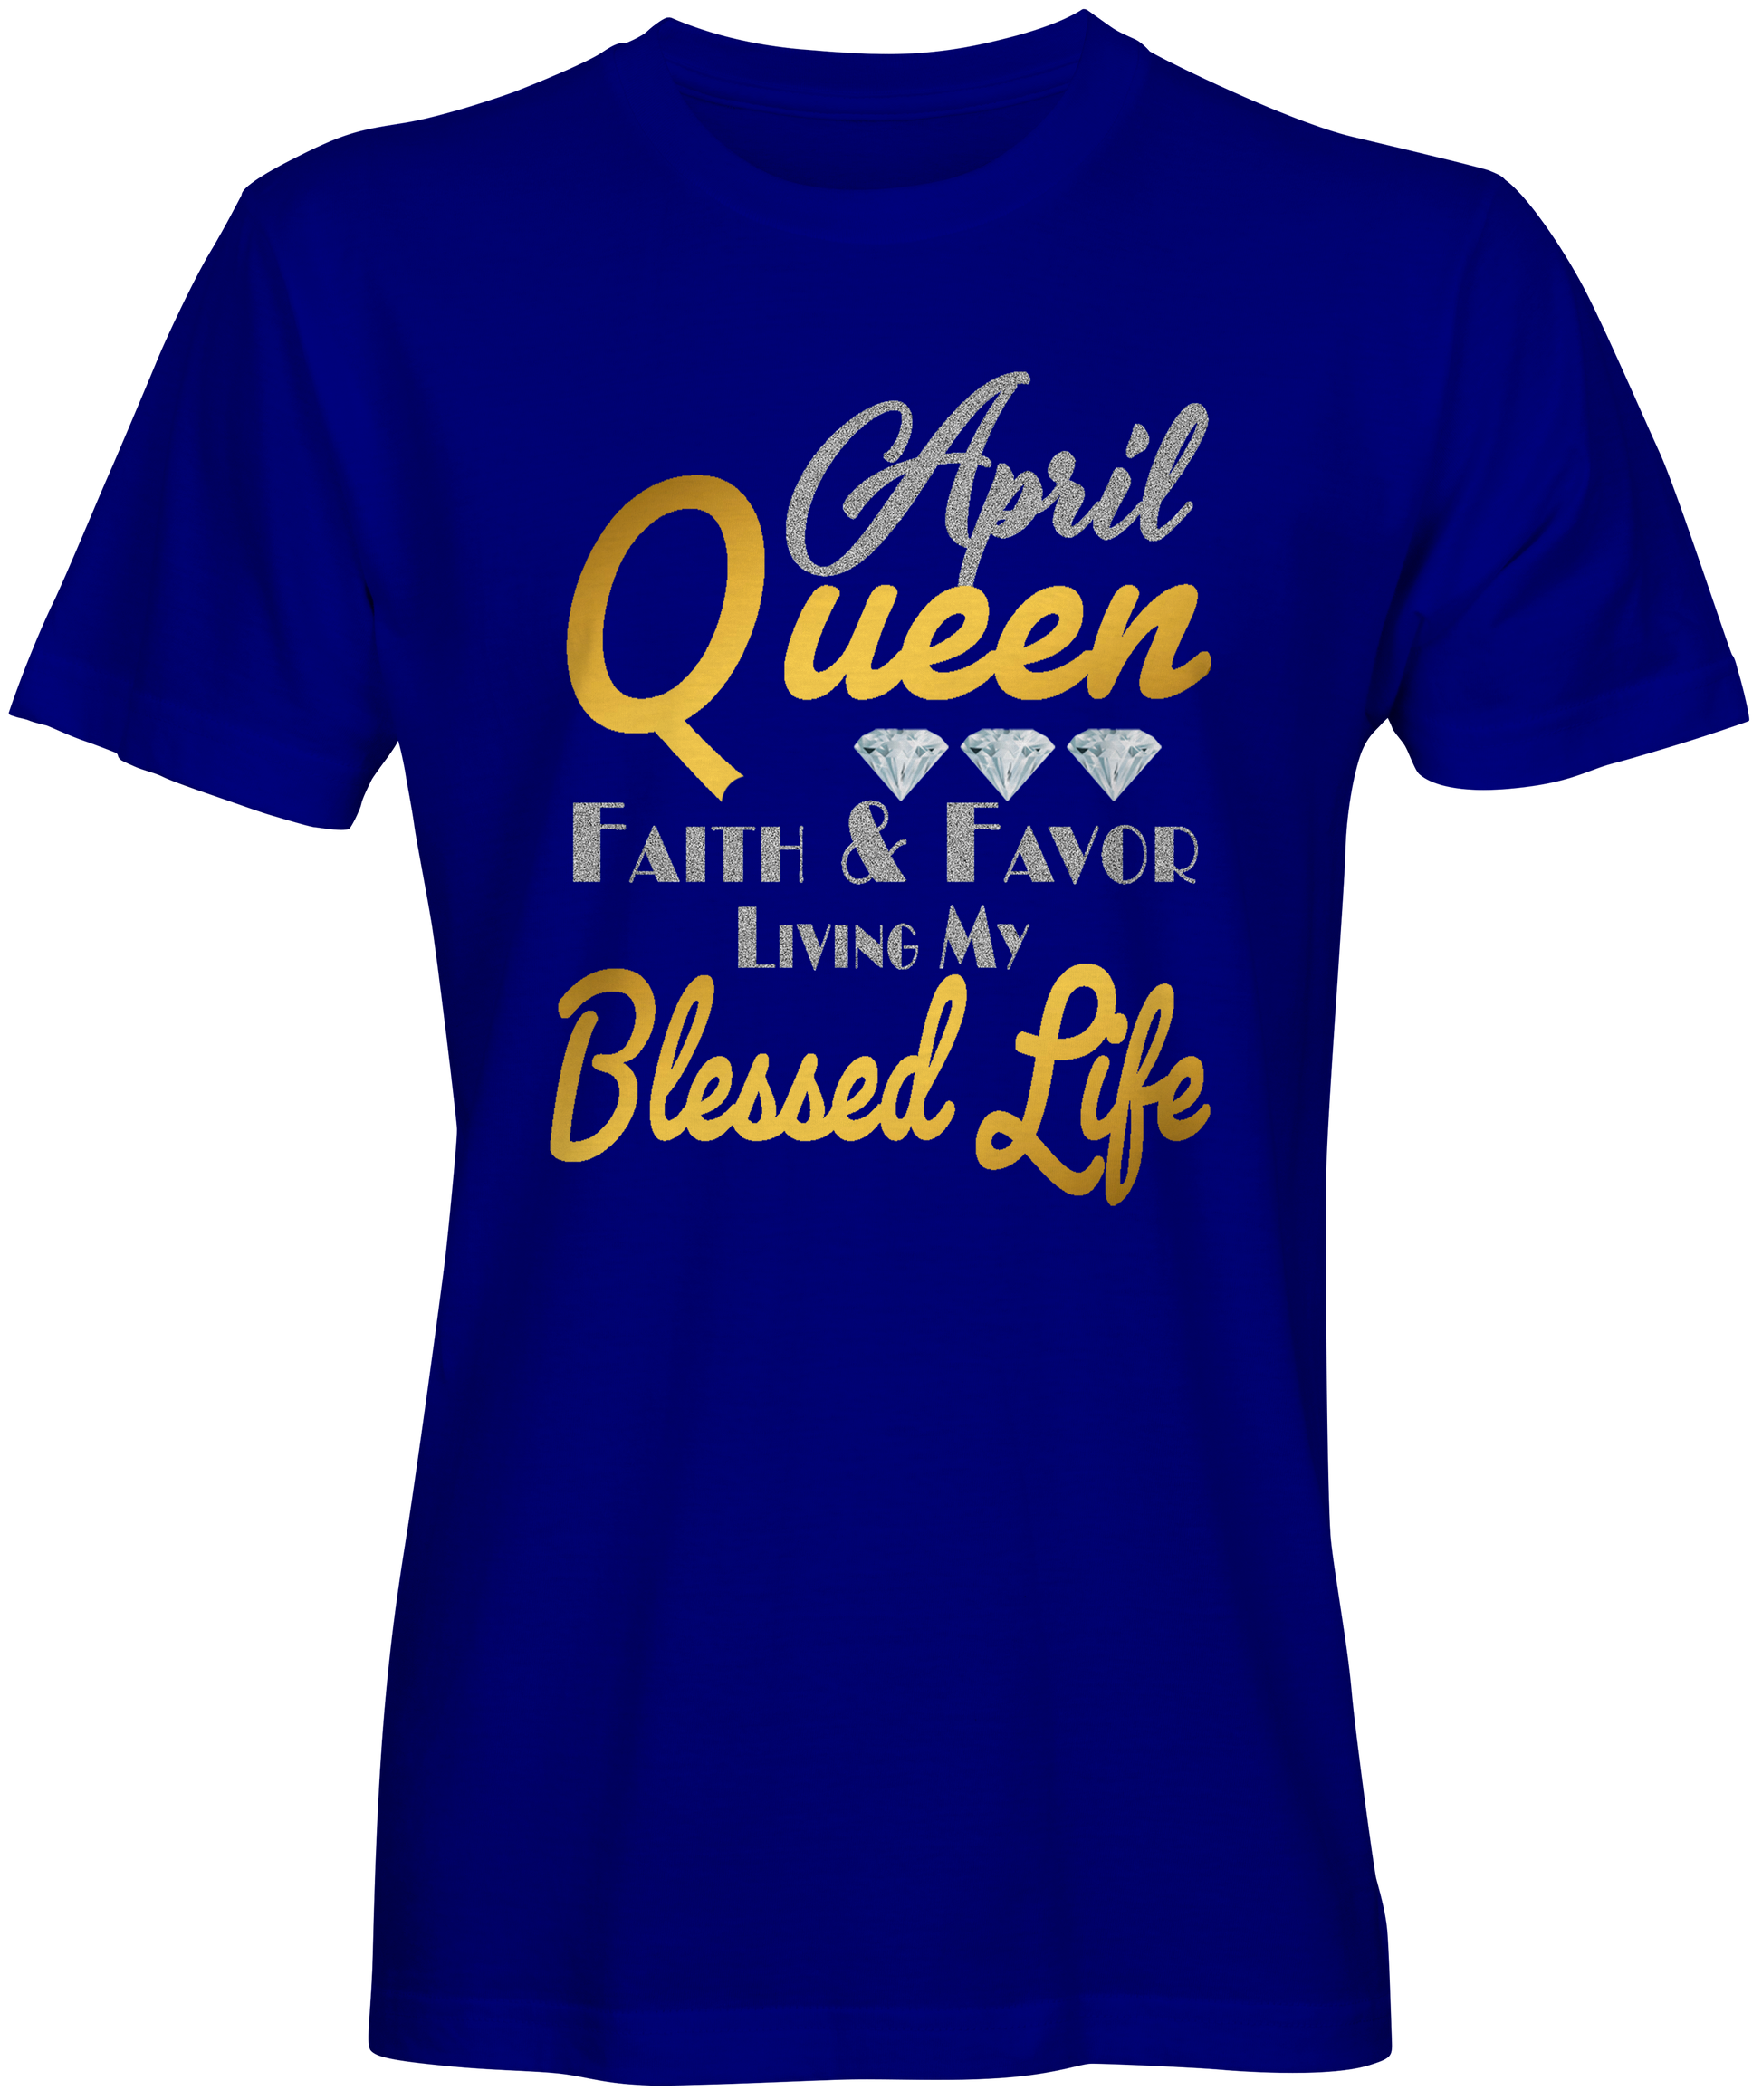 April Queen Ladies T-shirts for Sale